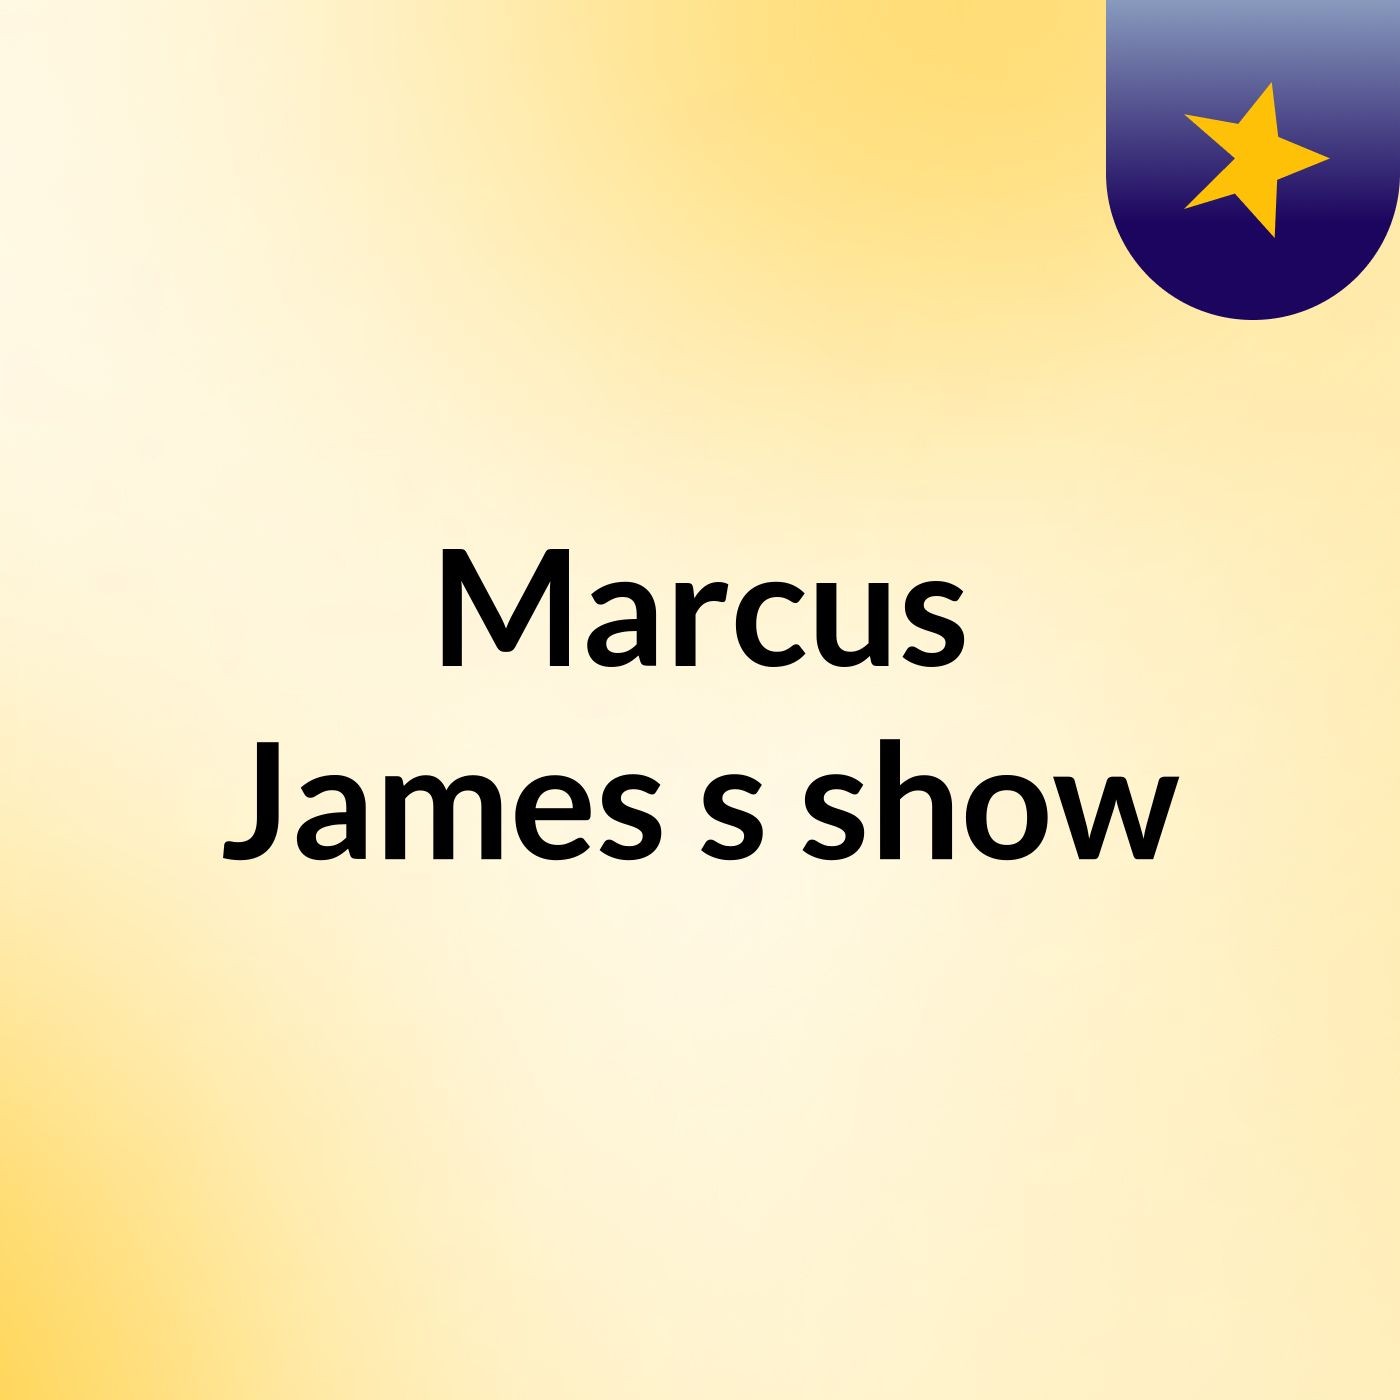 Marcus James's show